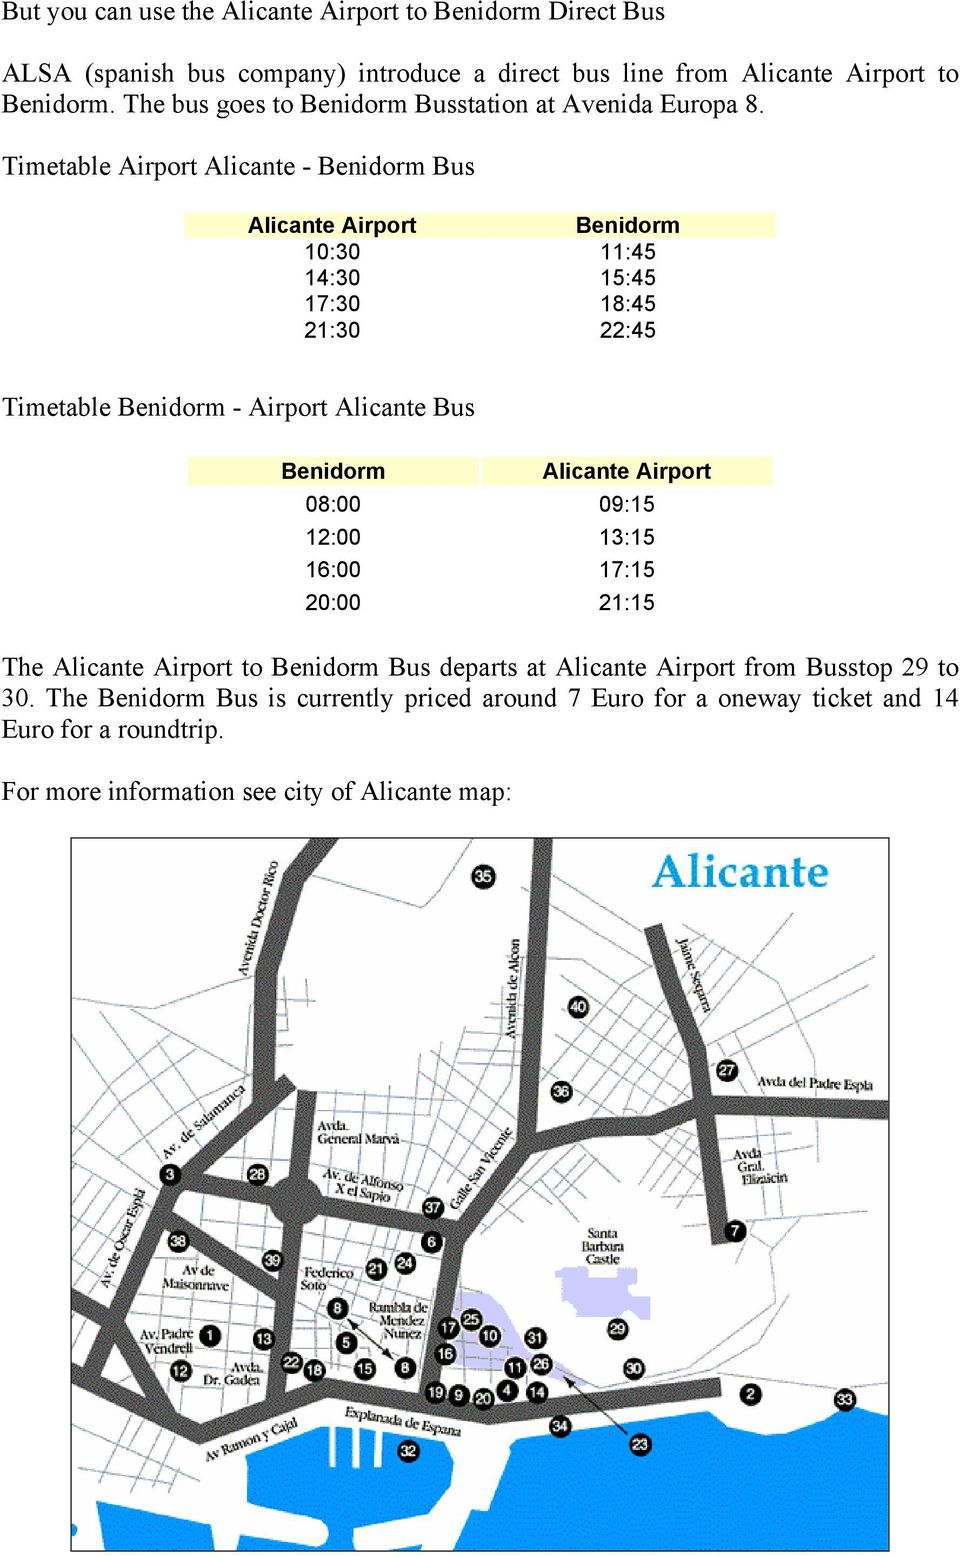 Timetable Airport Alicante - Benidorm Bus Alicante Airport Benidorm 10:30 11:45 14:30 15:45 17:30 18:45 21:30 22:45 Timetable Benidorm - Airport Alicante Bus Benidorm